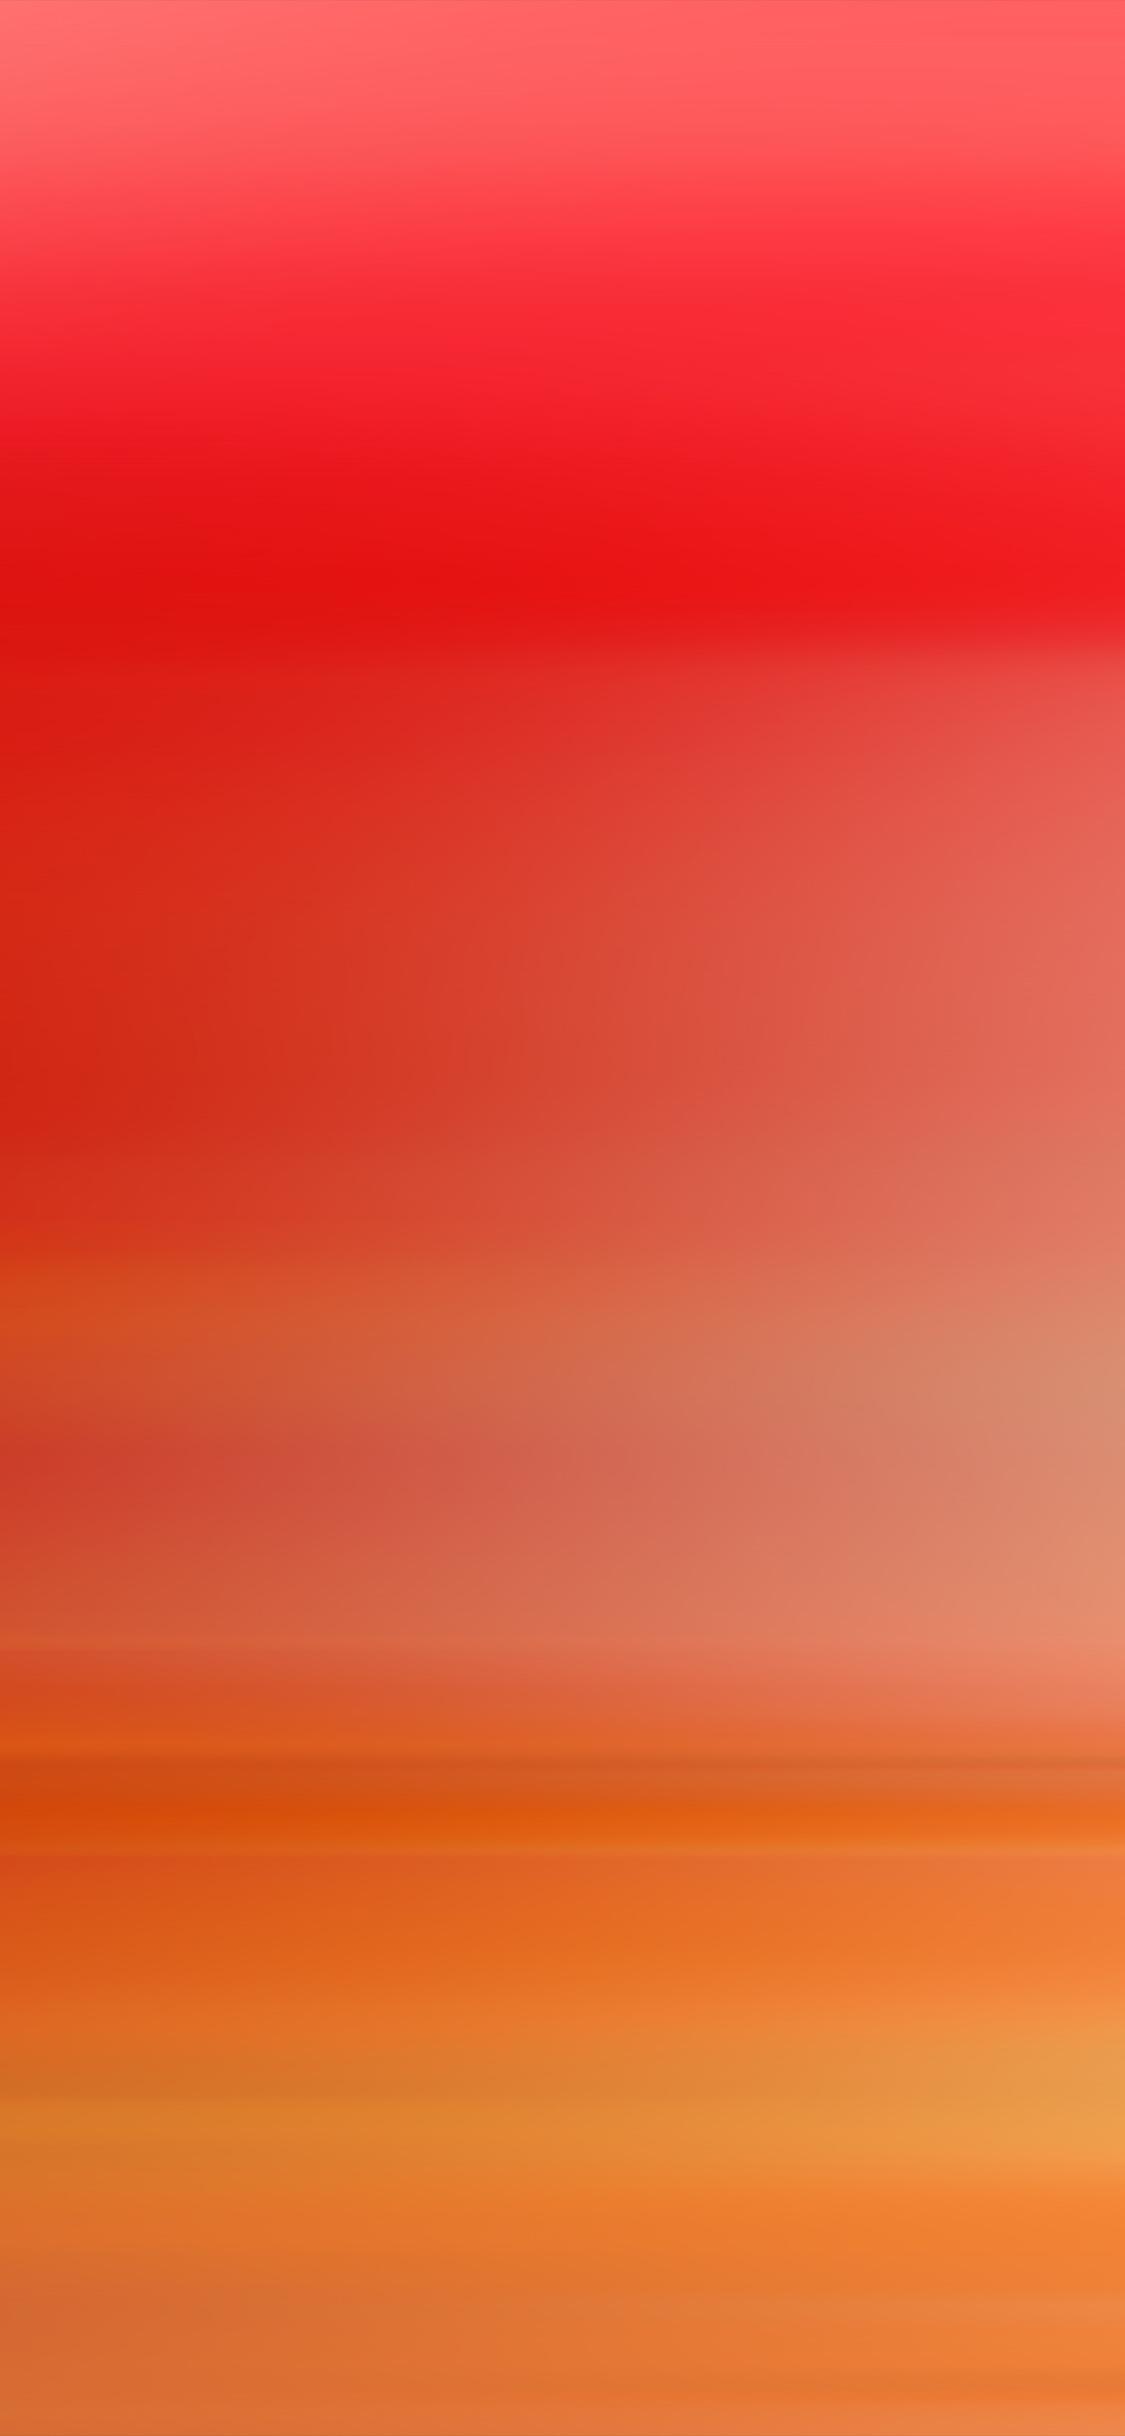 iPhone X wallpaper. red orange